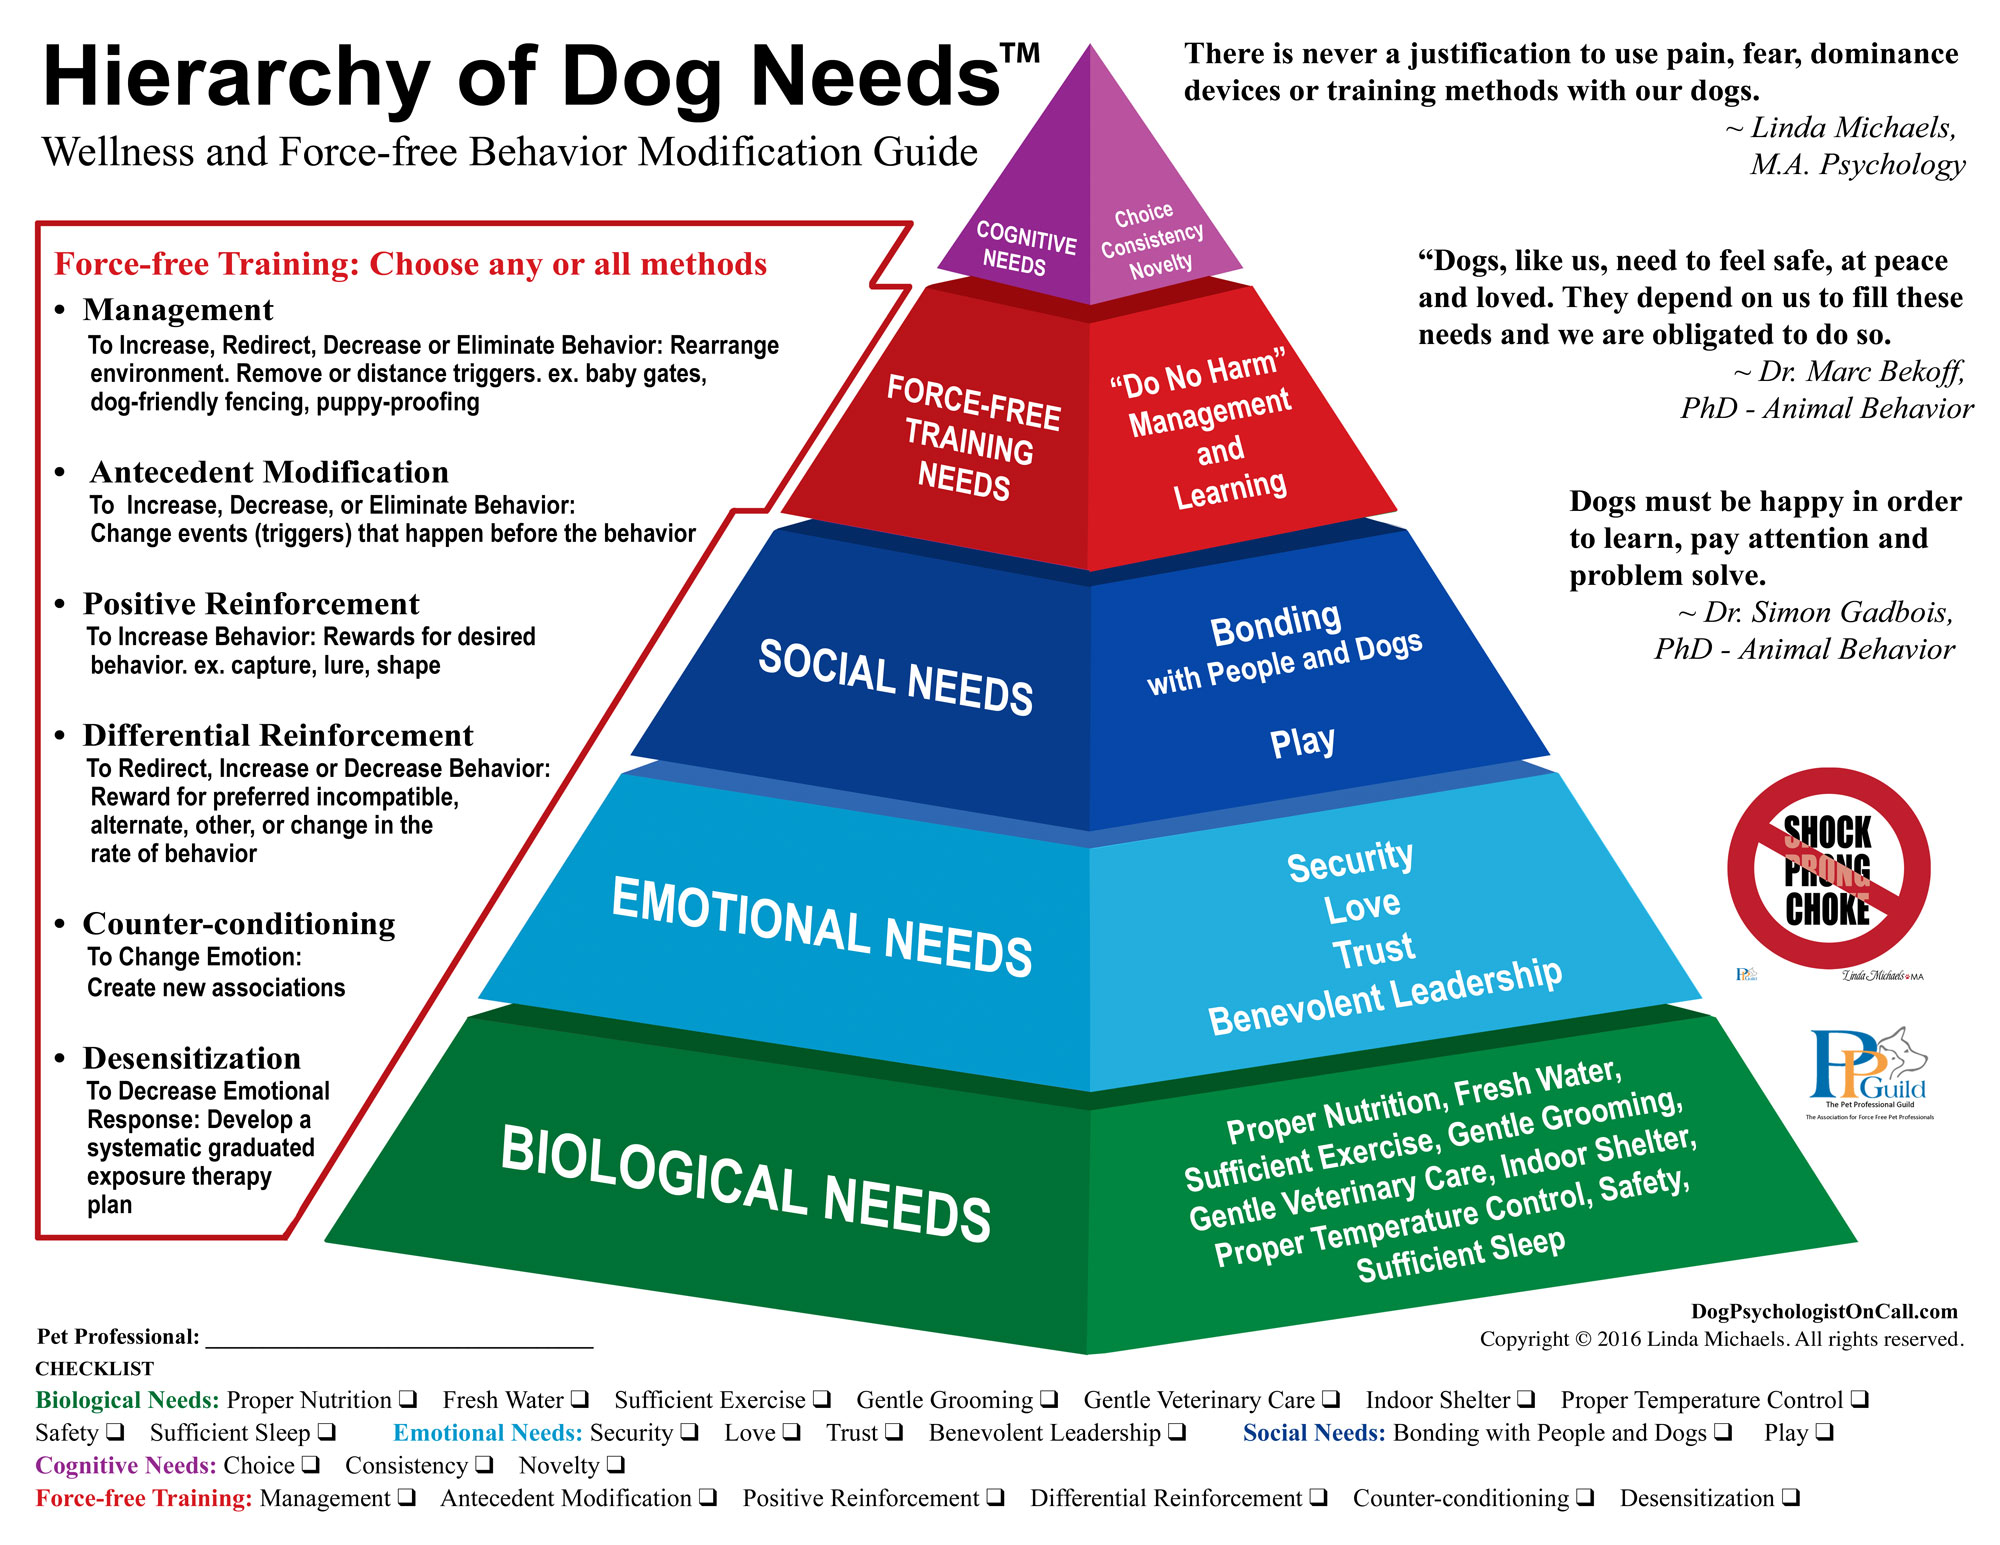 Hierarchy of Dog Needs TM.   Linda Michaels, M.A., — Del Mar Dog Training